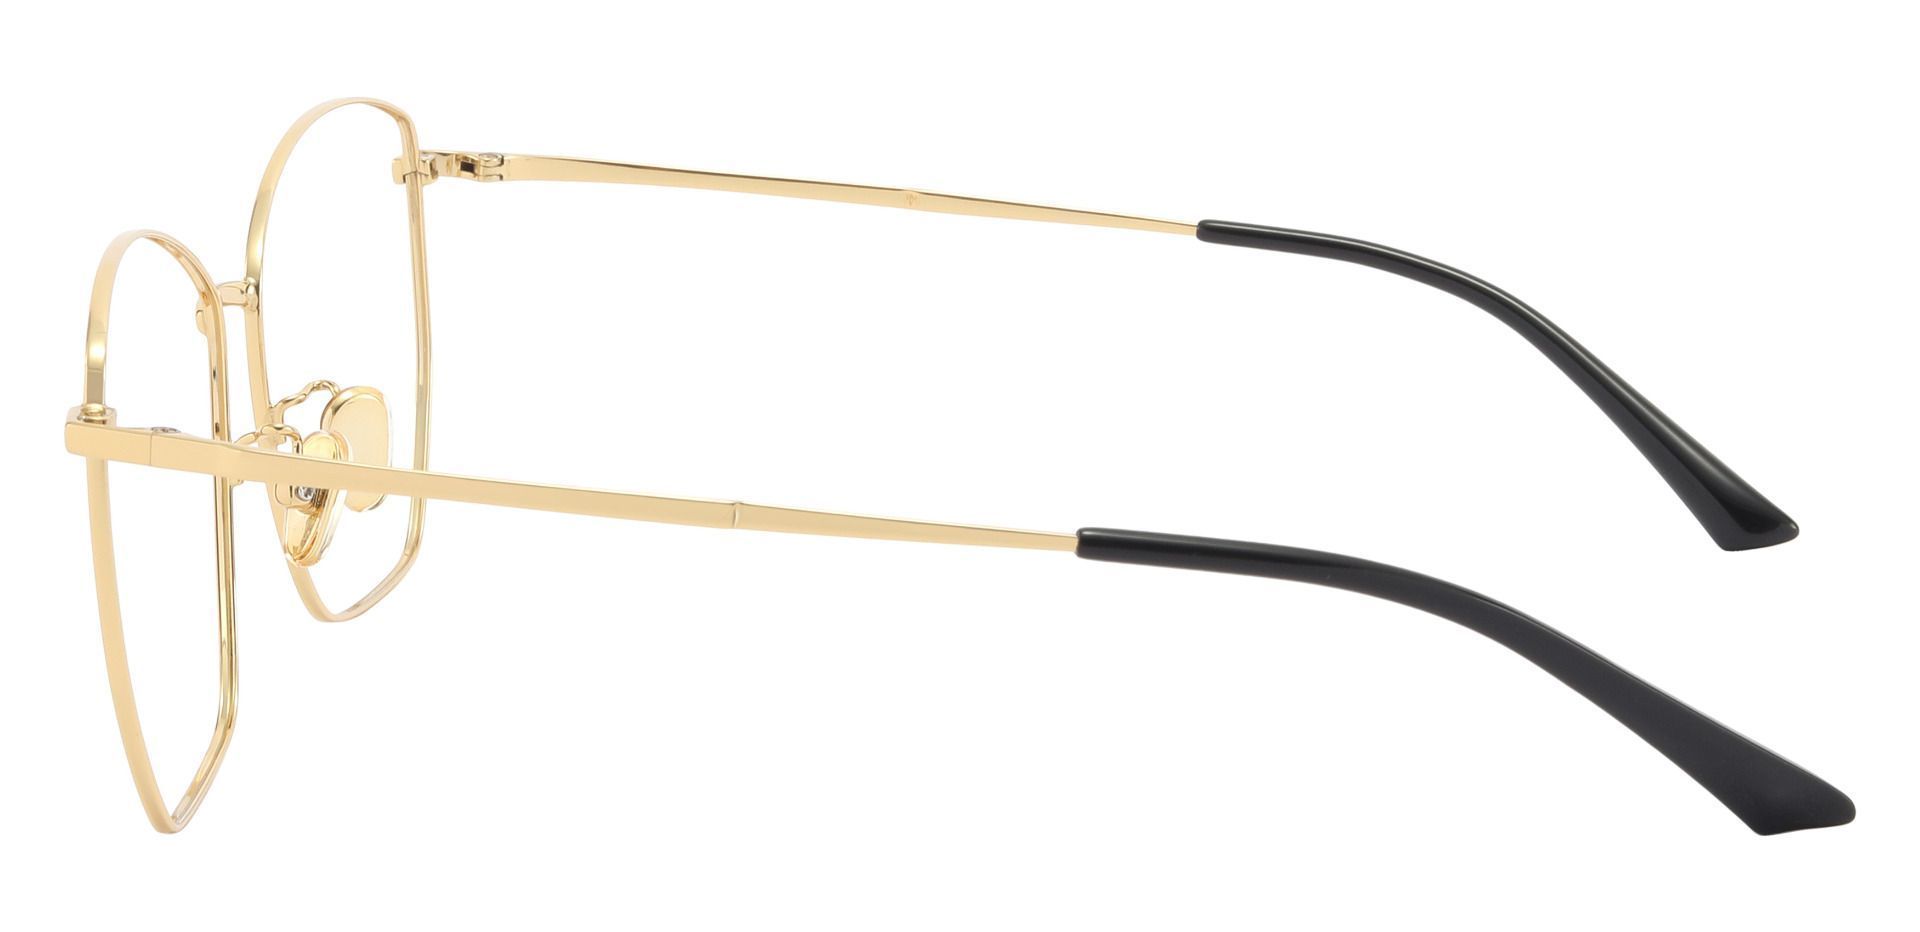 Boswell Geometric Lined Bifocal Glasses - Gold